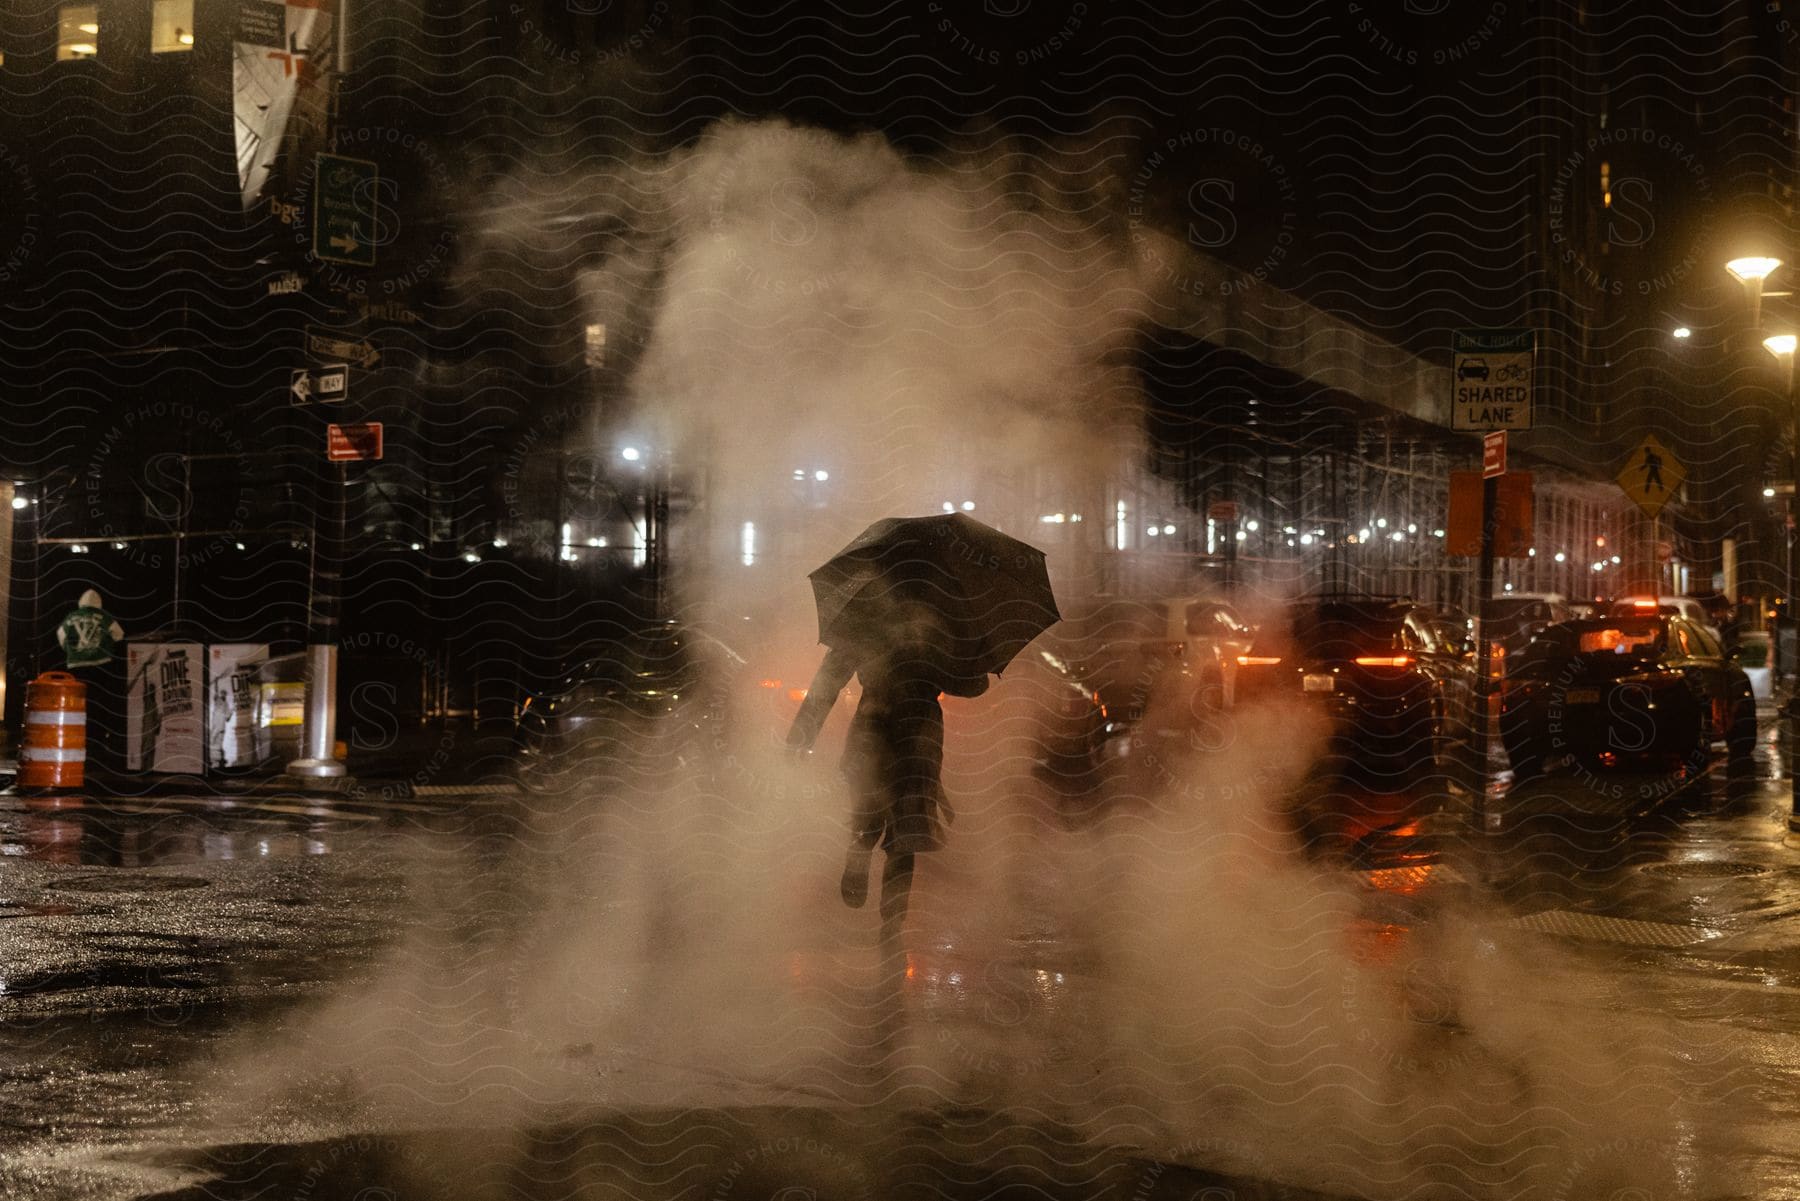 A person with an umbrella runs through fog in a big city at night